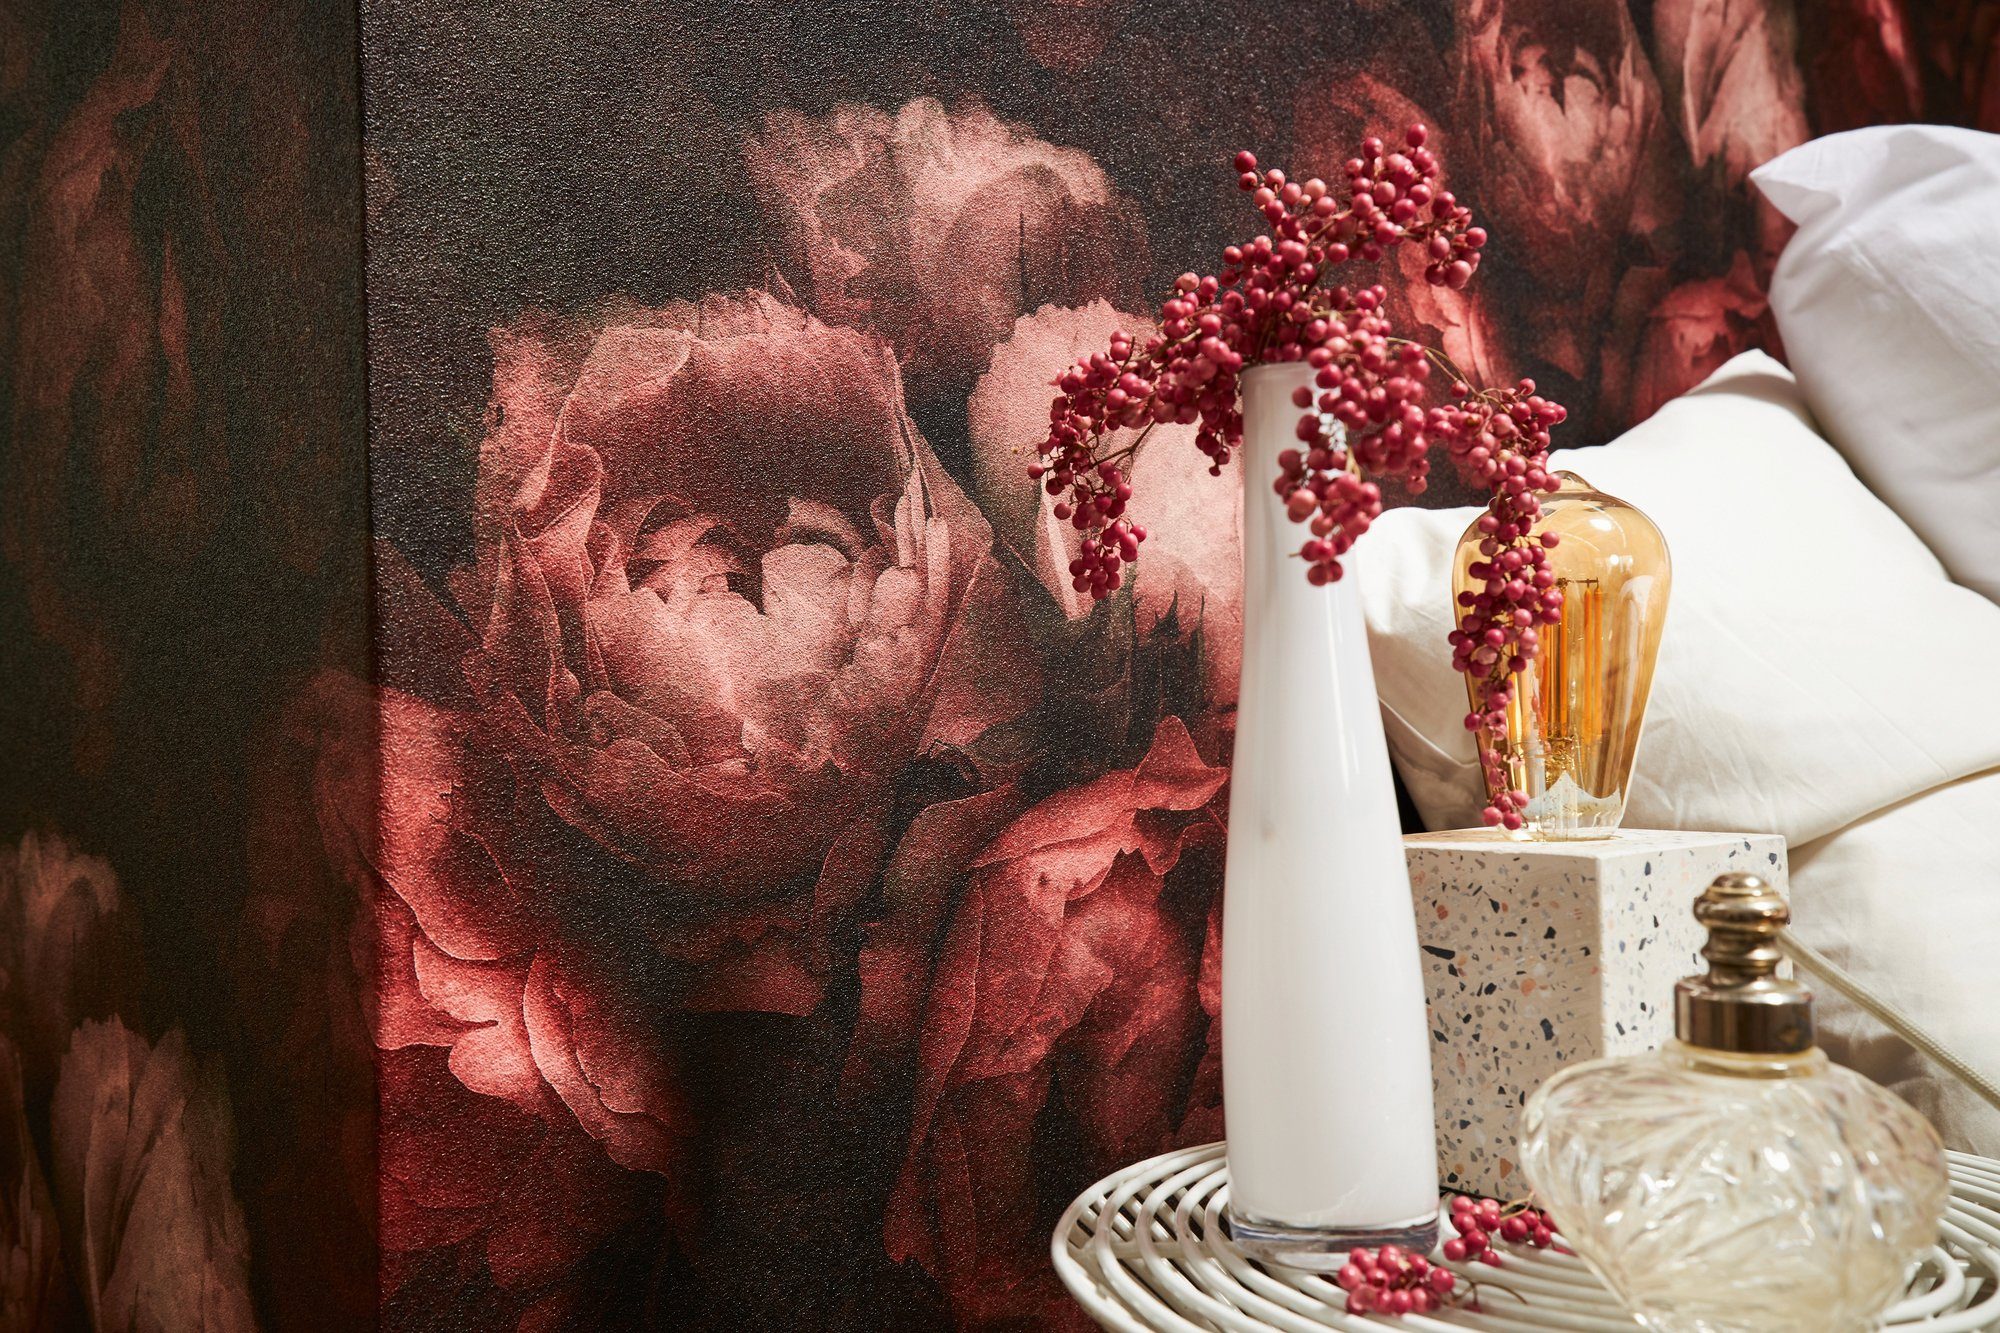 New floral, Vliestapete Création Walls Rosen, Dream Tapete rot walls Blumen living romantischen A.S. mit Romantic